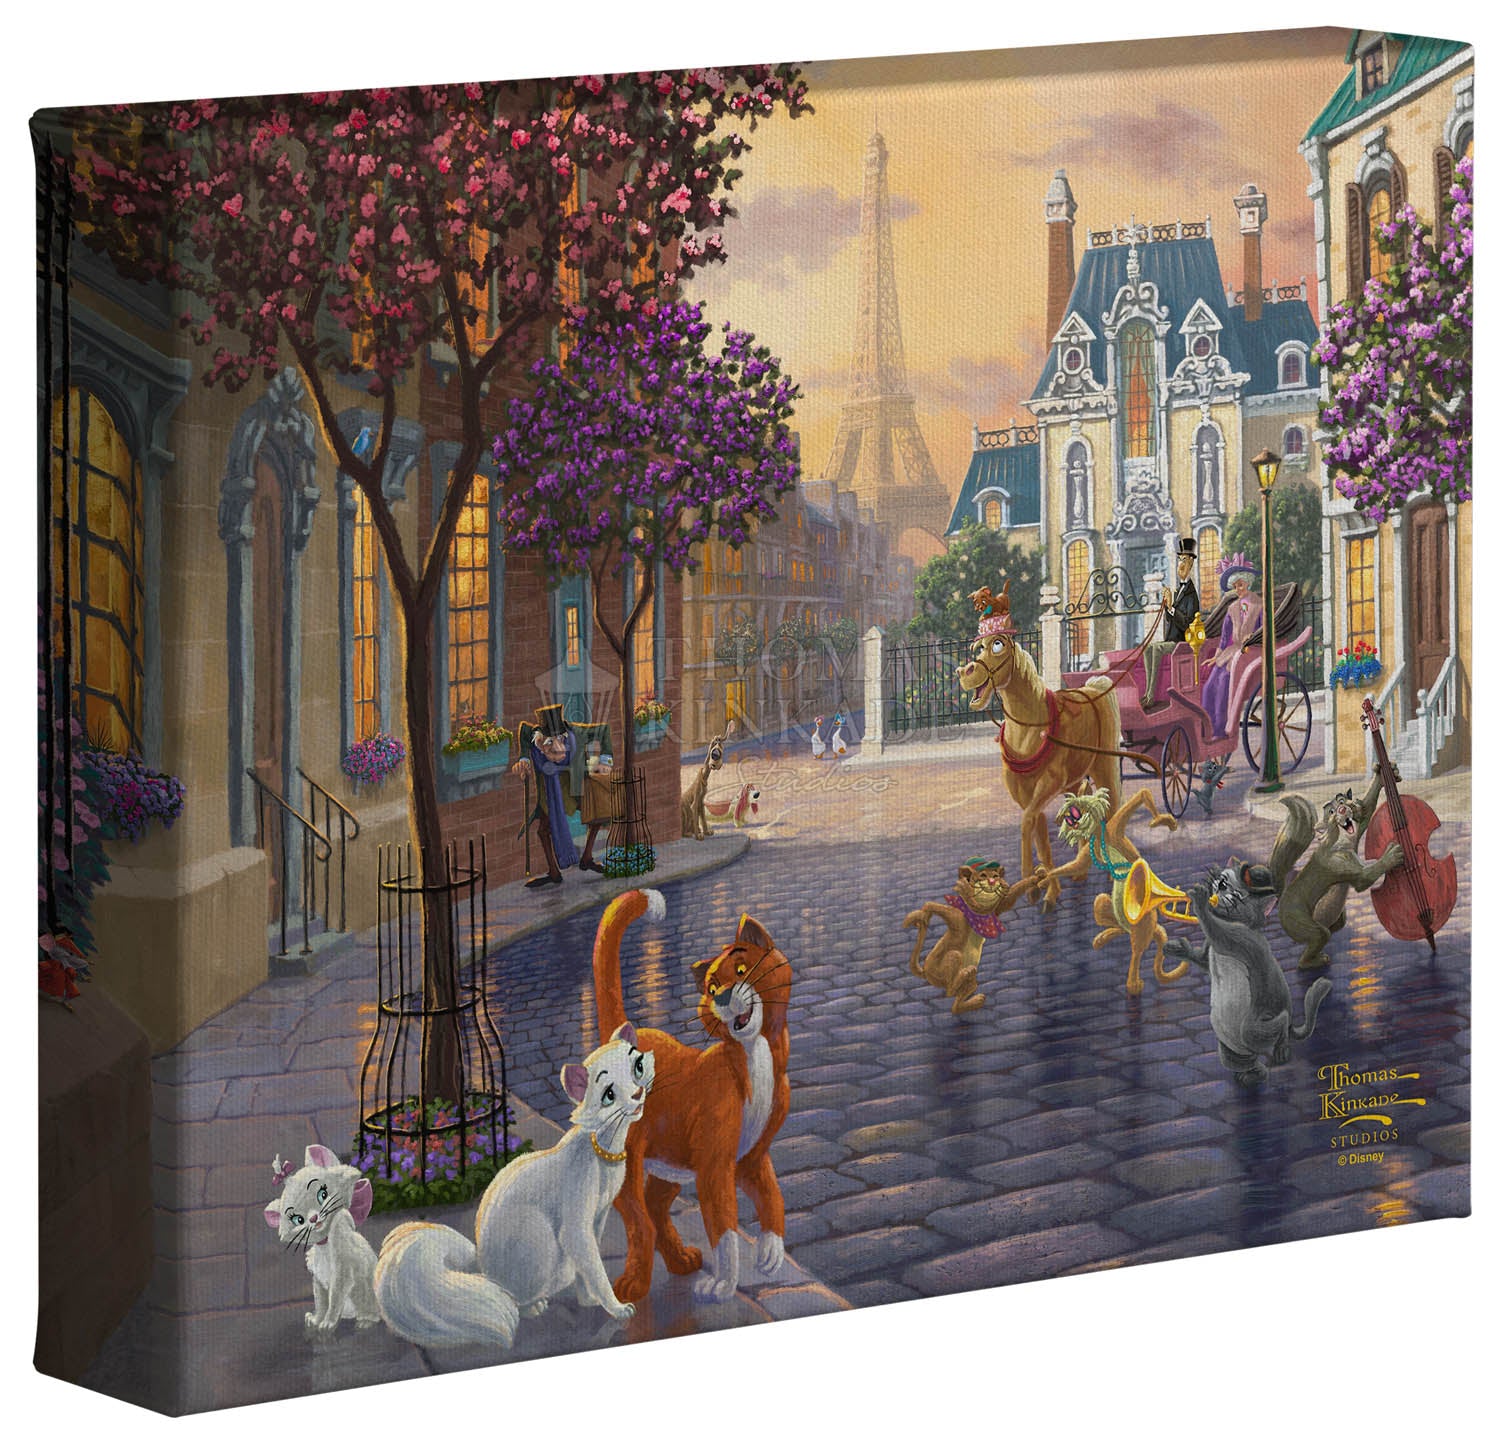 The Aristocats Disney Gallery Wraps By Thomas Kinkade Studios – Disney  Art On Main Street